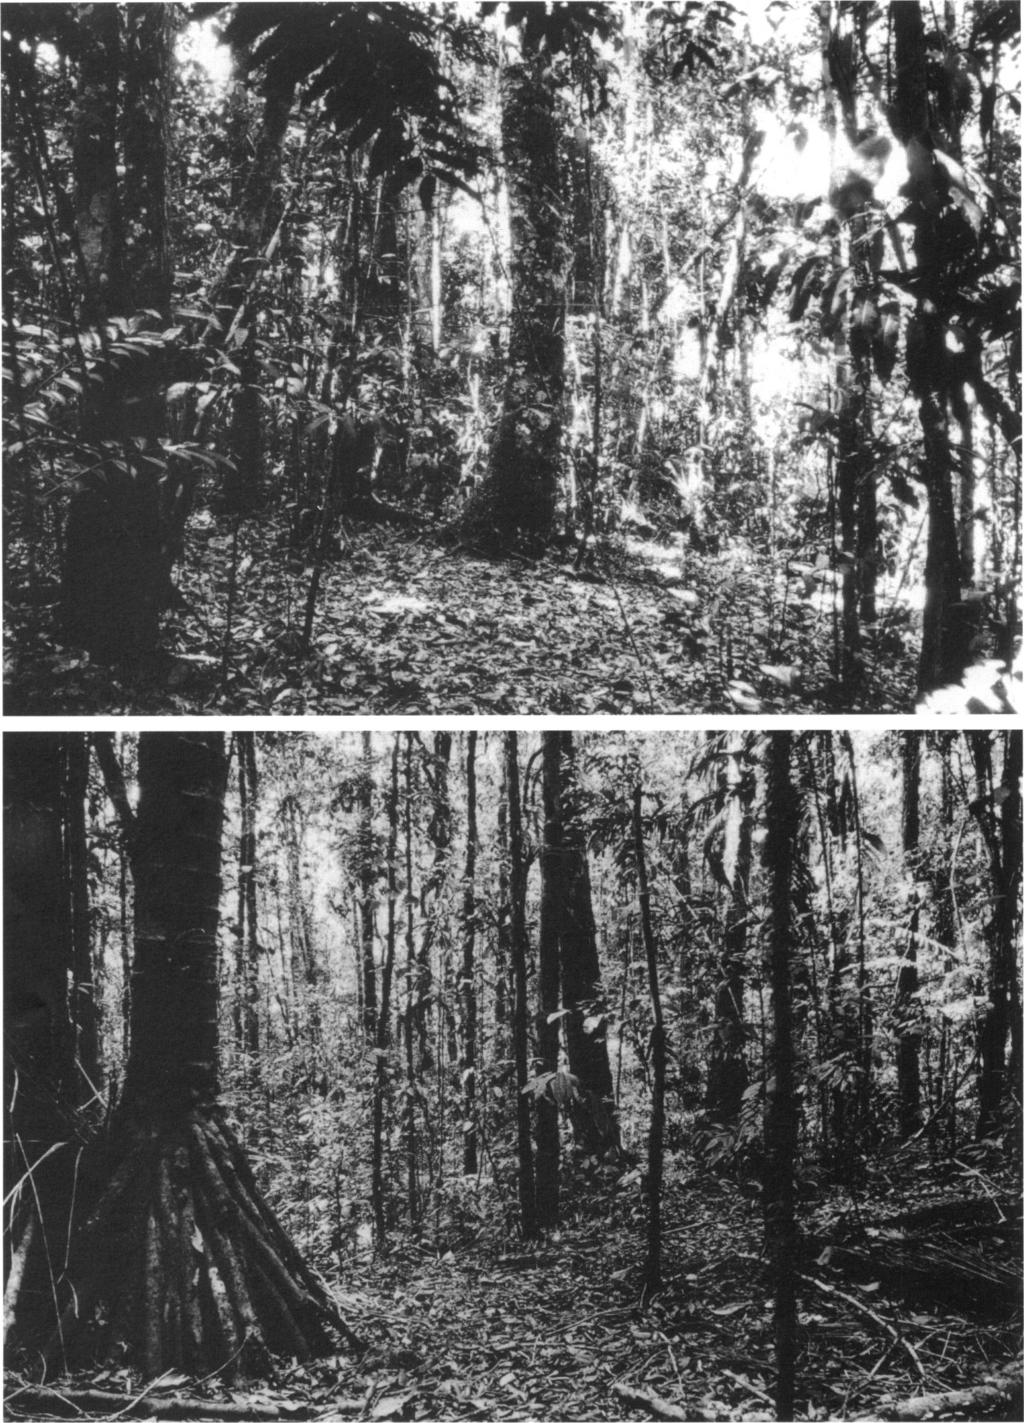 10 AMERICAN MUSEUM NOVITATES NO. 3196 x,: Wm Fig. 6. Montane forest habitats of Eleutherodactylus laticorpus, new species, on southwest sector of Cerro Tacarcuna massif.